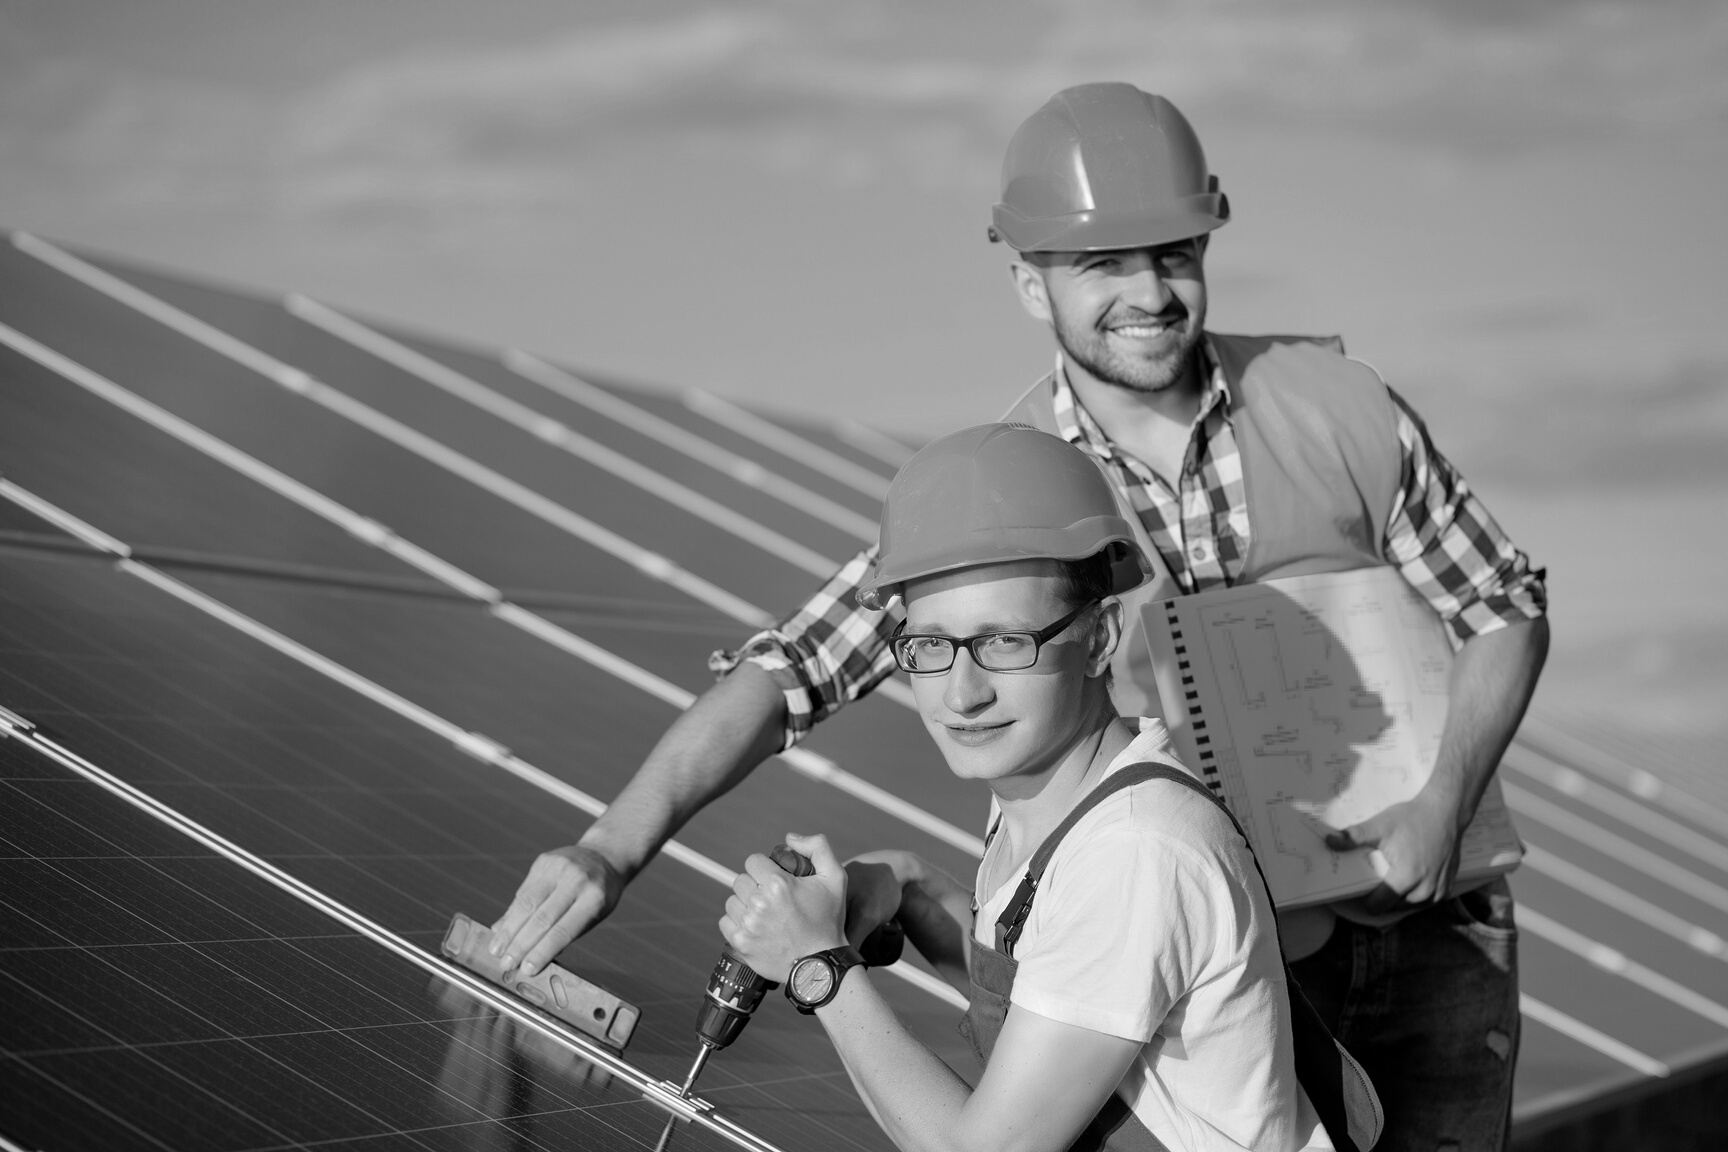 Engineers installing solar panels.